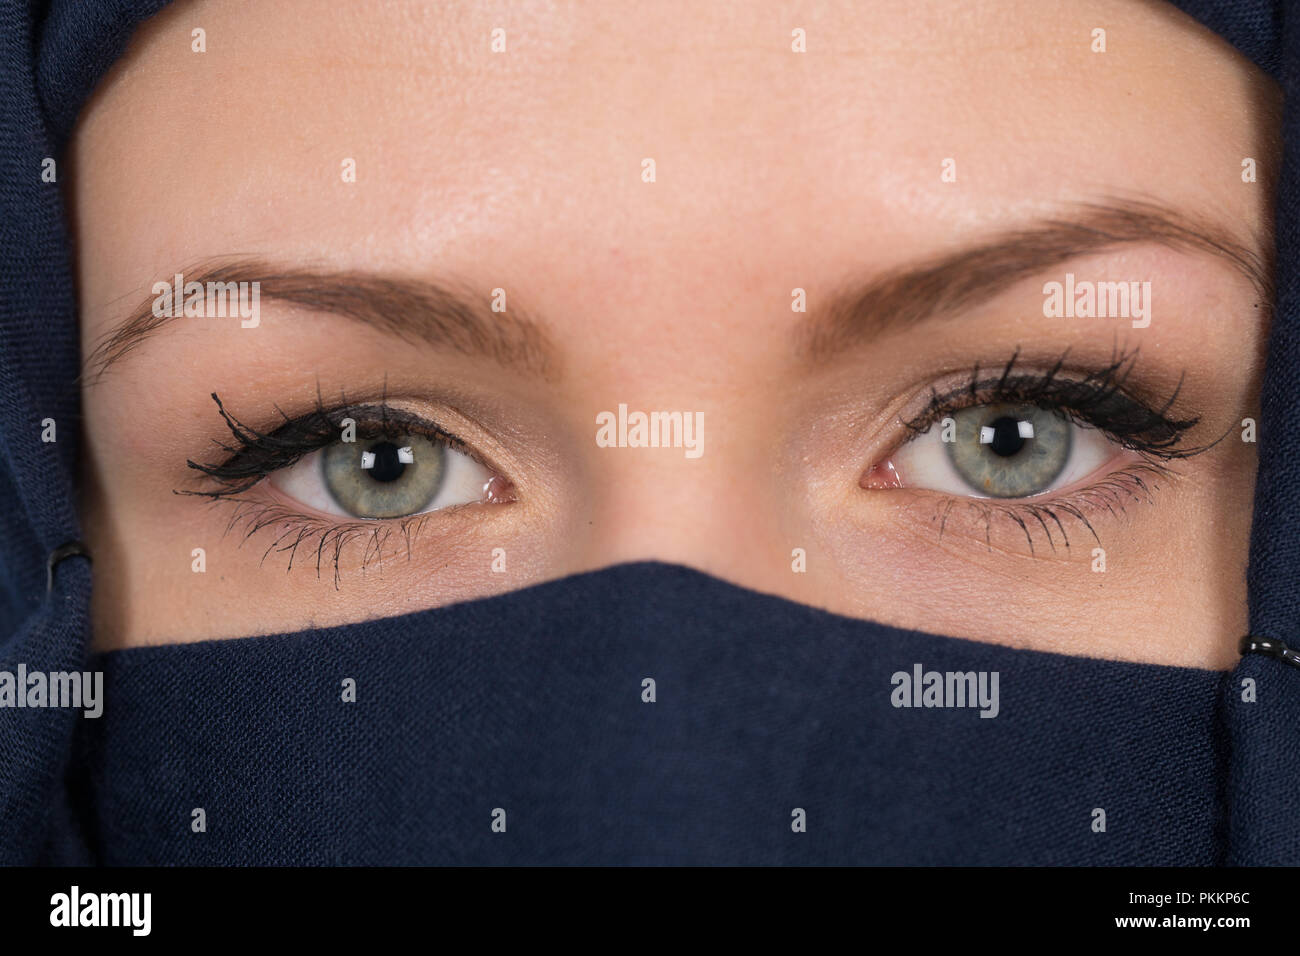 Beautiful Muslim girl wearing burqa closeup Stock Photo